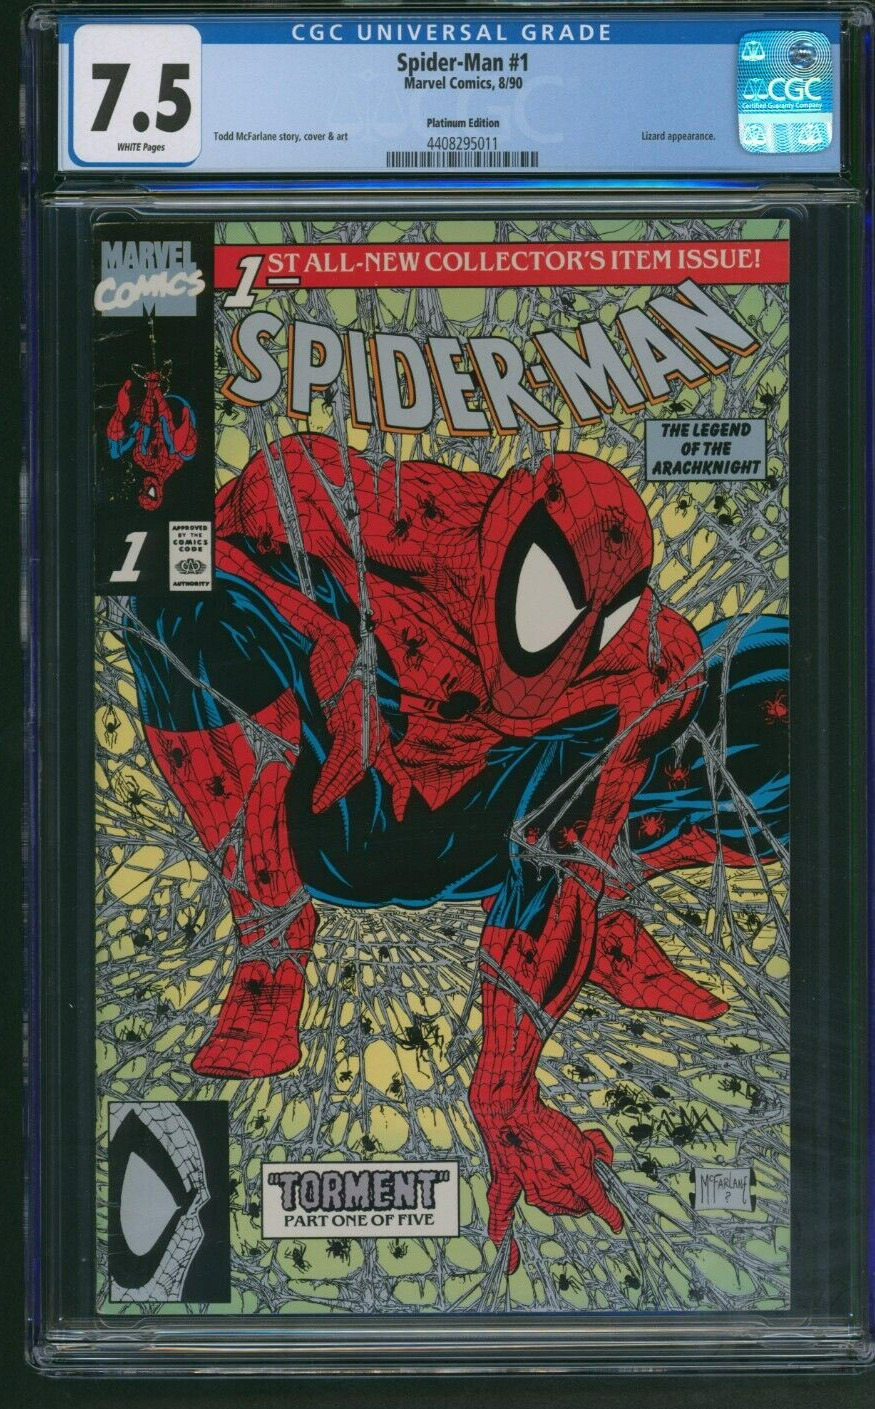 Spider-Man #1 Platinum Edition CGC 7.5 Marvel 1990 Todd McFarlane